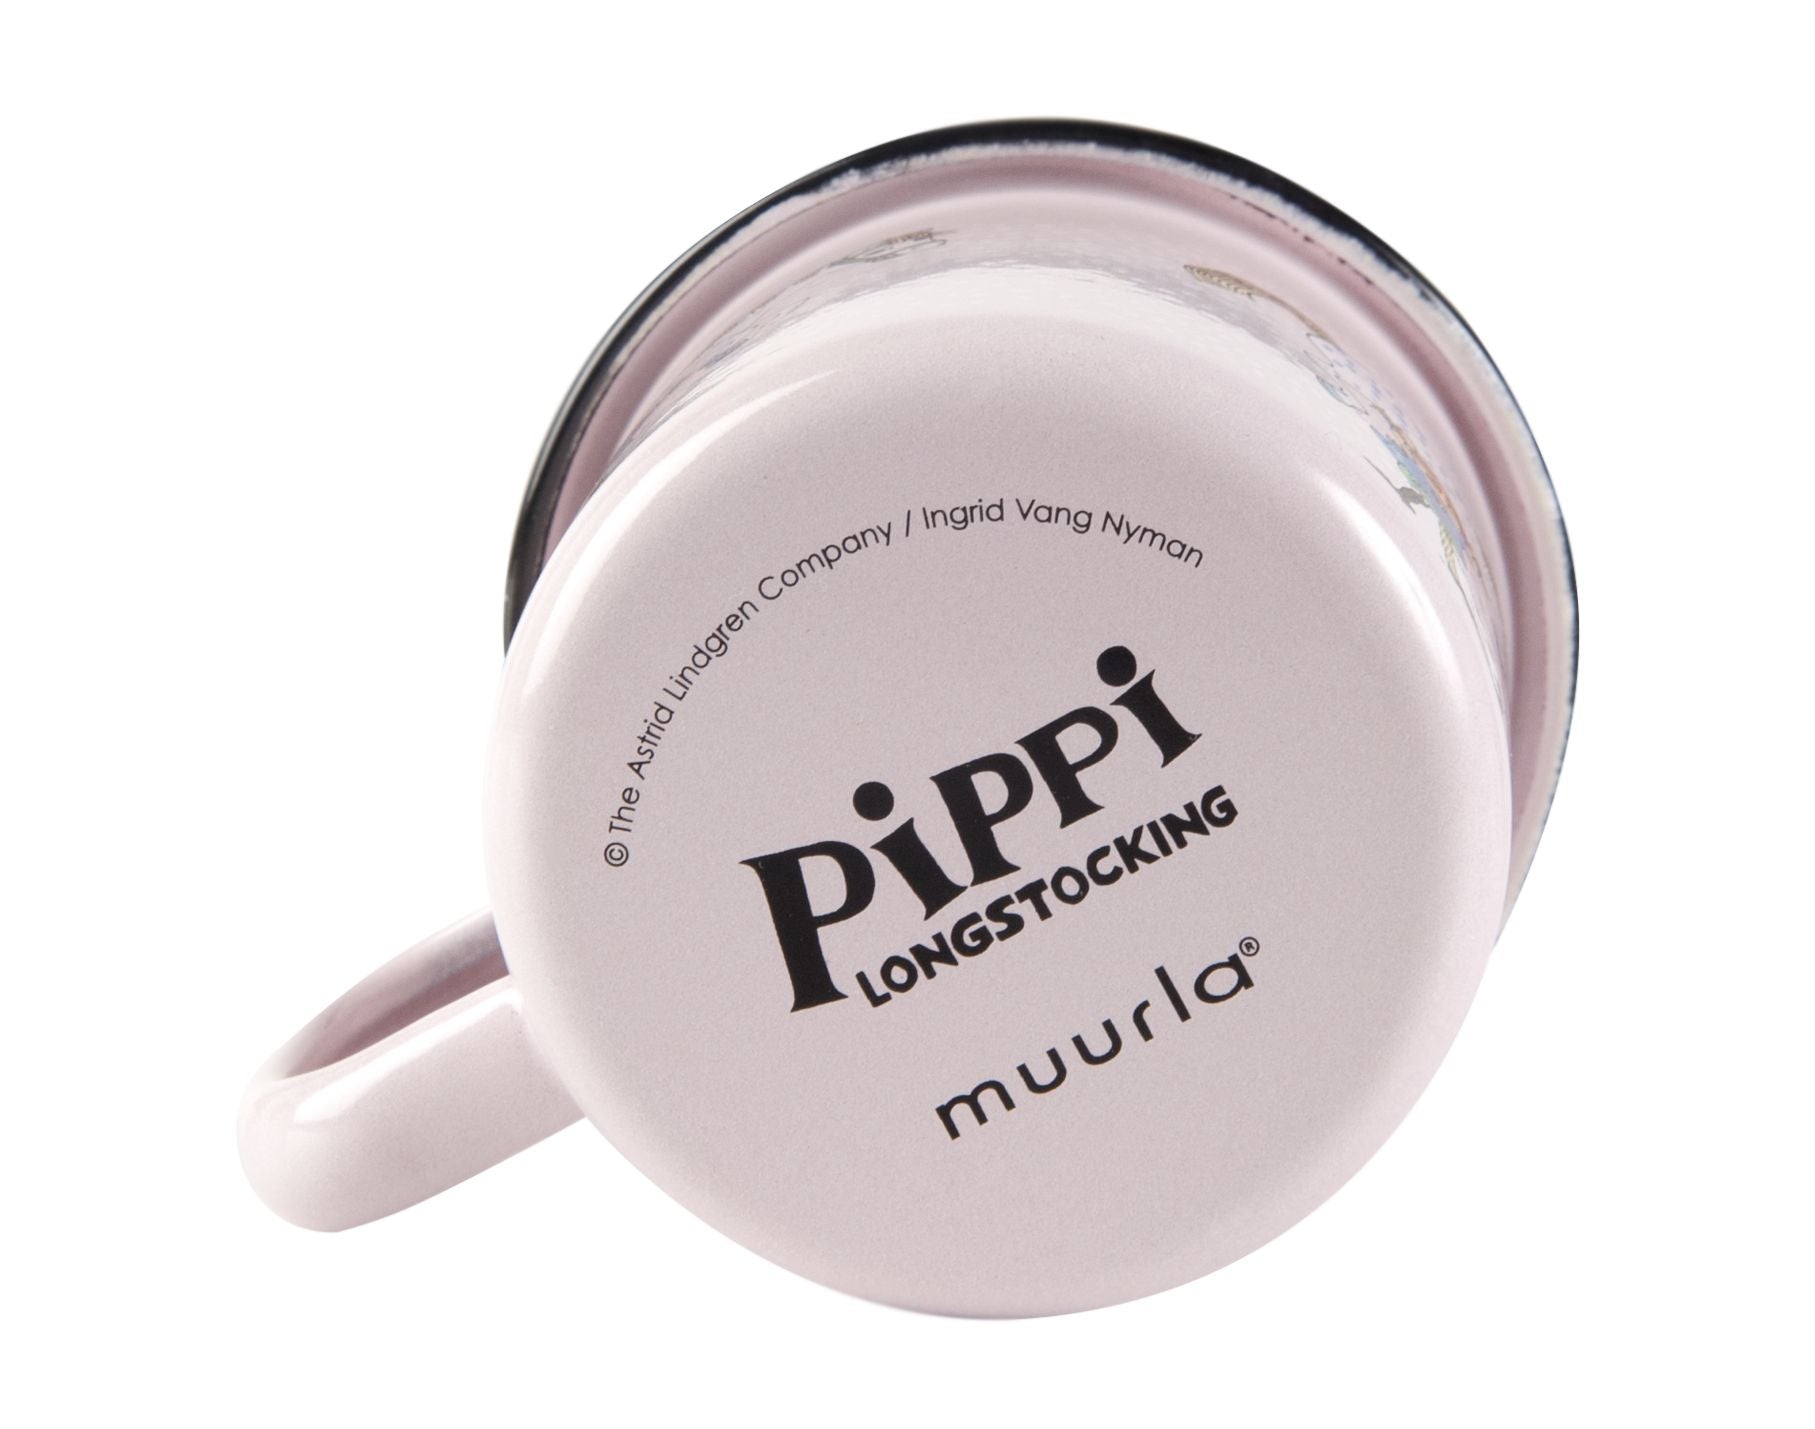 Muurla Pippi Long Stocking搪瓷杯，皮皮和马，粉红色